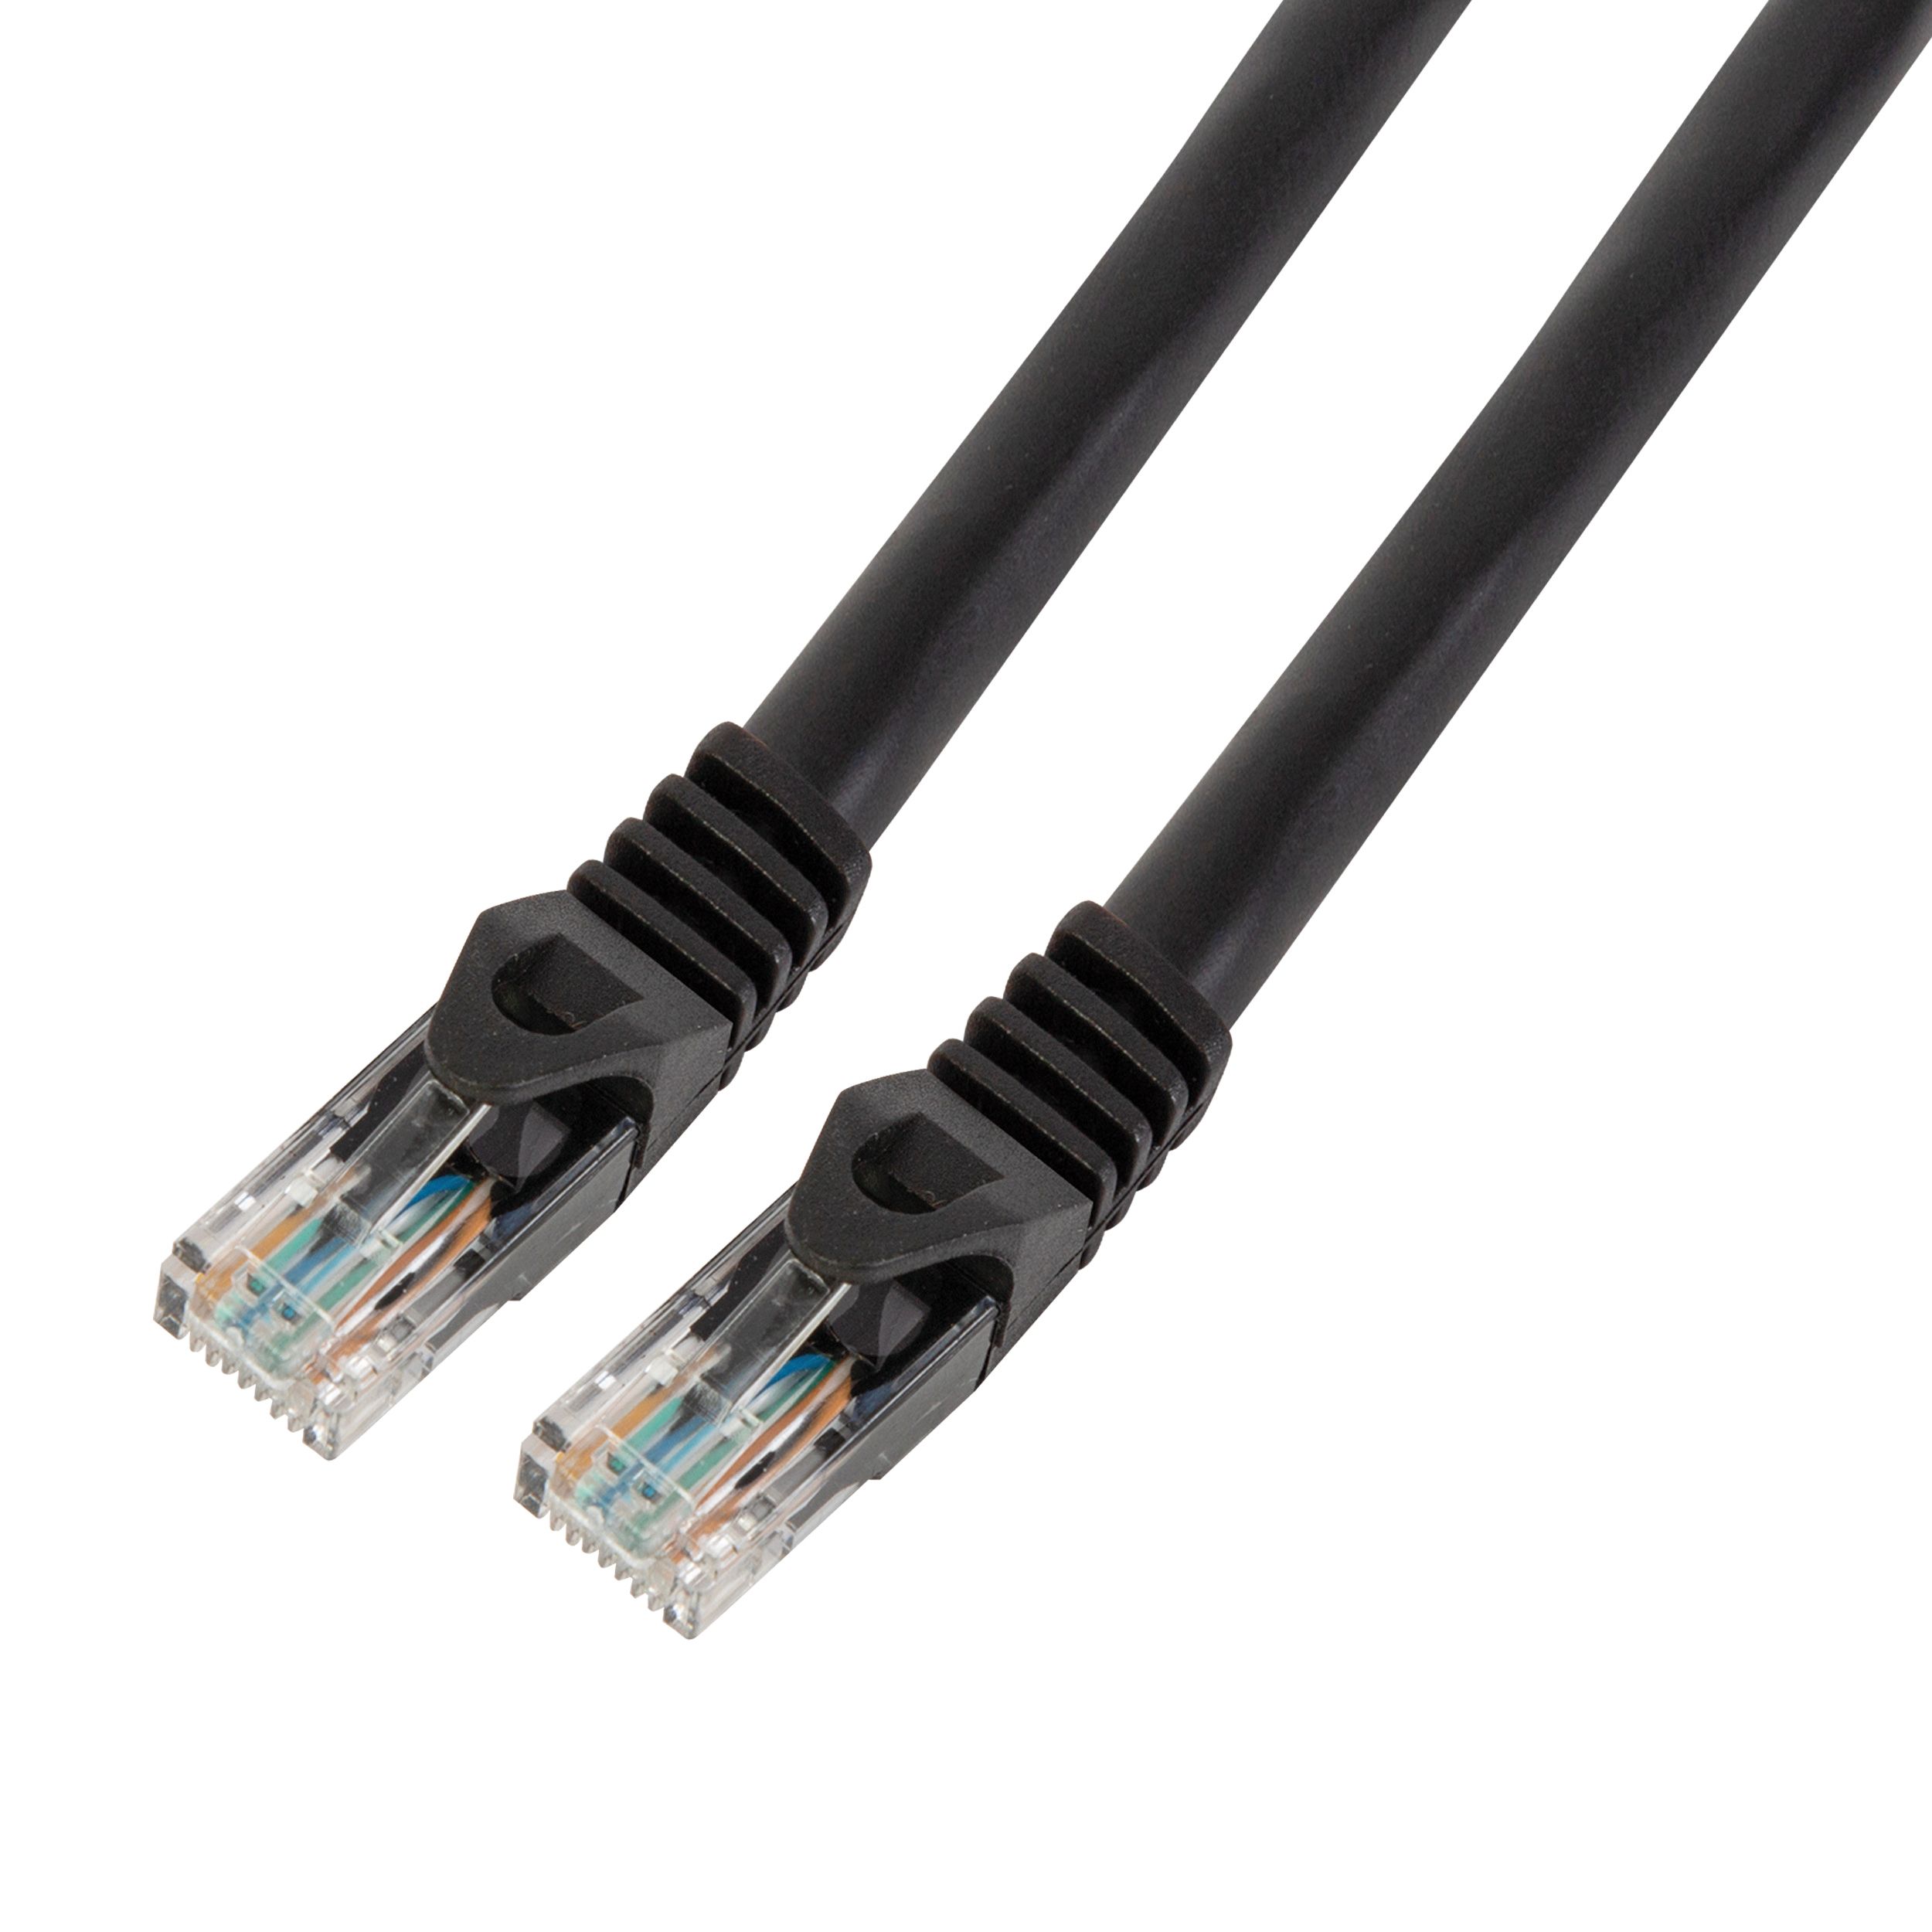 Cat 6 Ethernet Cable - Cat6 Patch Cable, Cat 6 Patch Cable, Cat6 Cable, Cat  6 Cable, Cat6 Ethernet Cable, Network Cable, Internet Cable - Black 